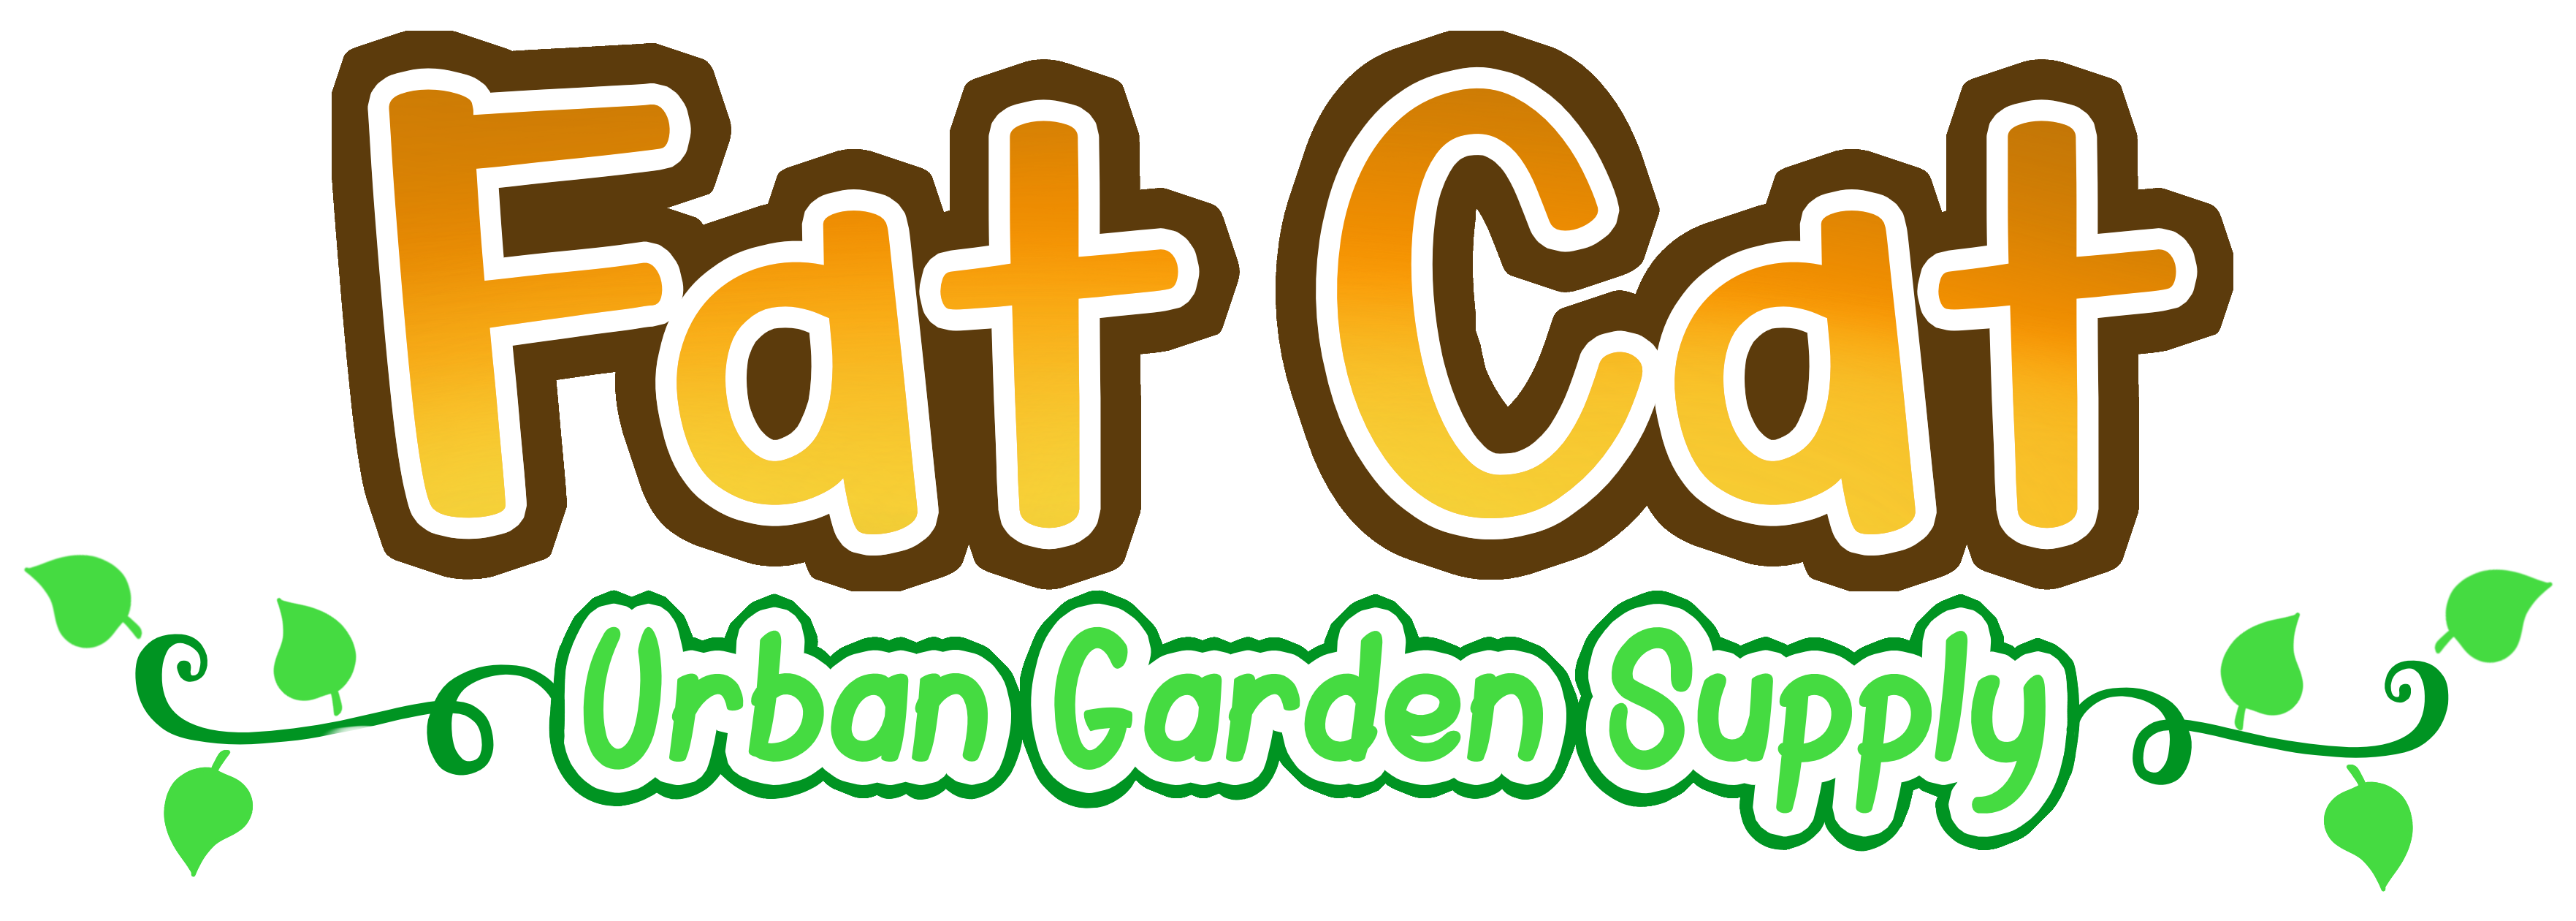 Fat Cat Urban Garden Supply Logo